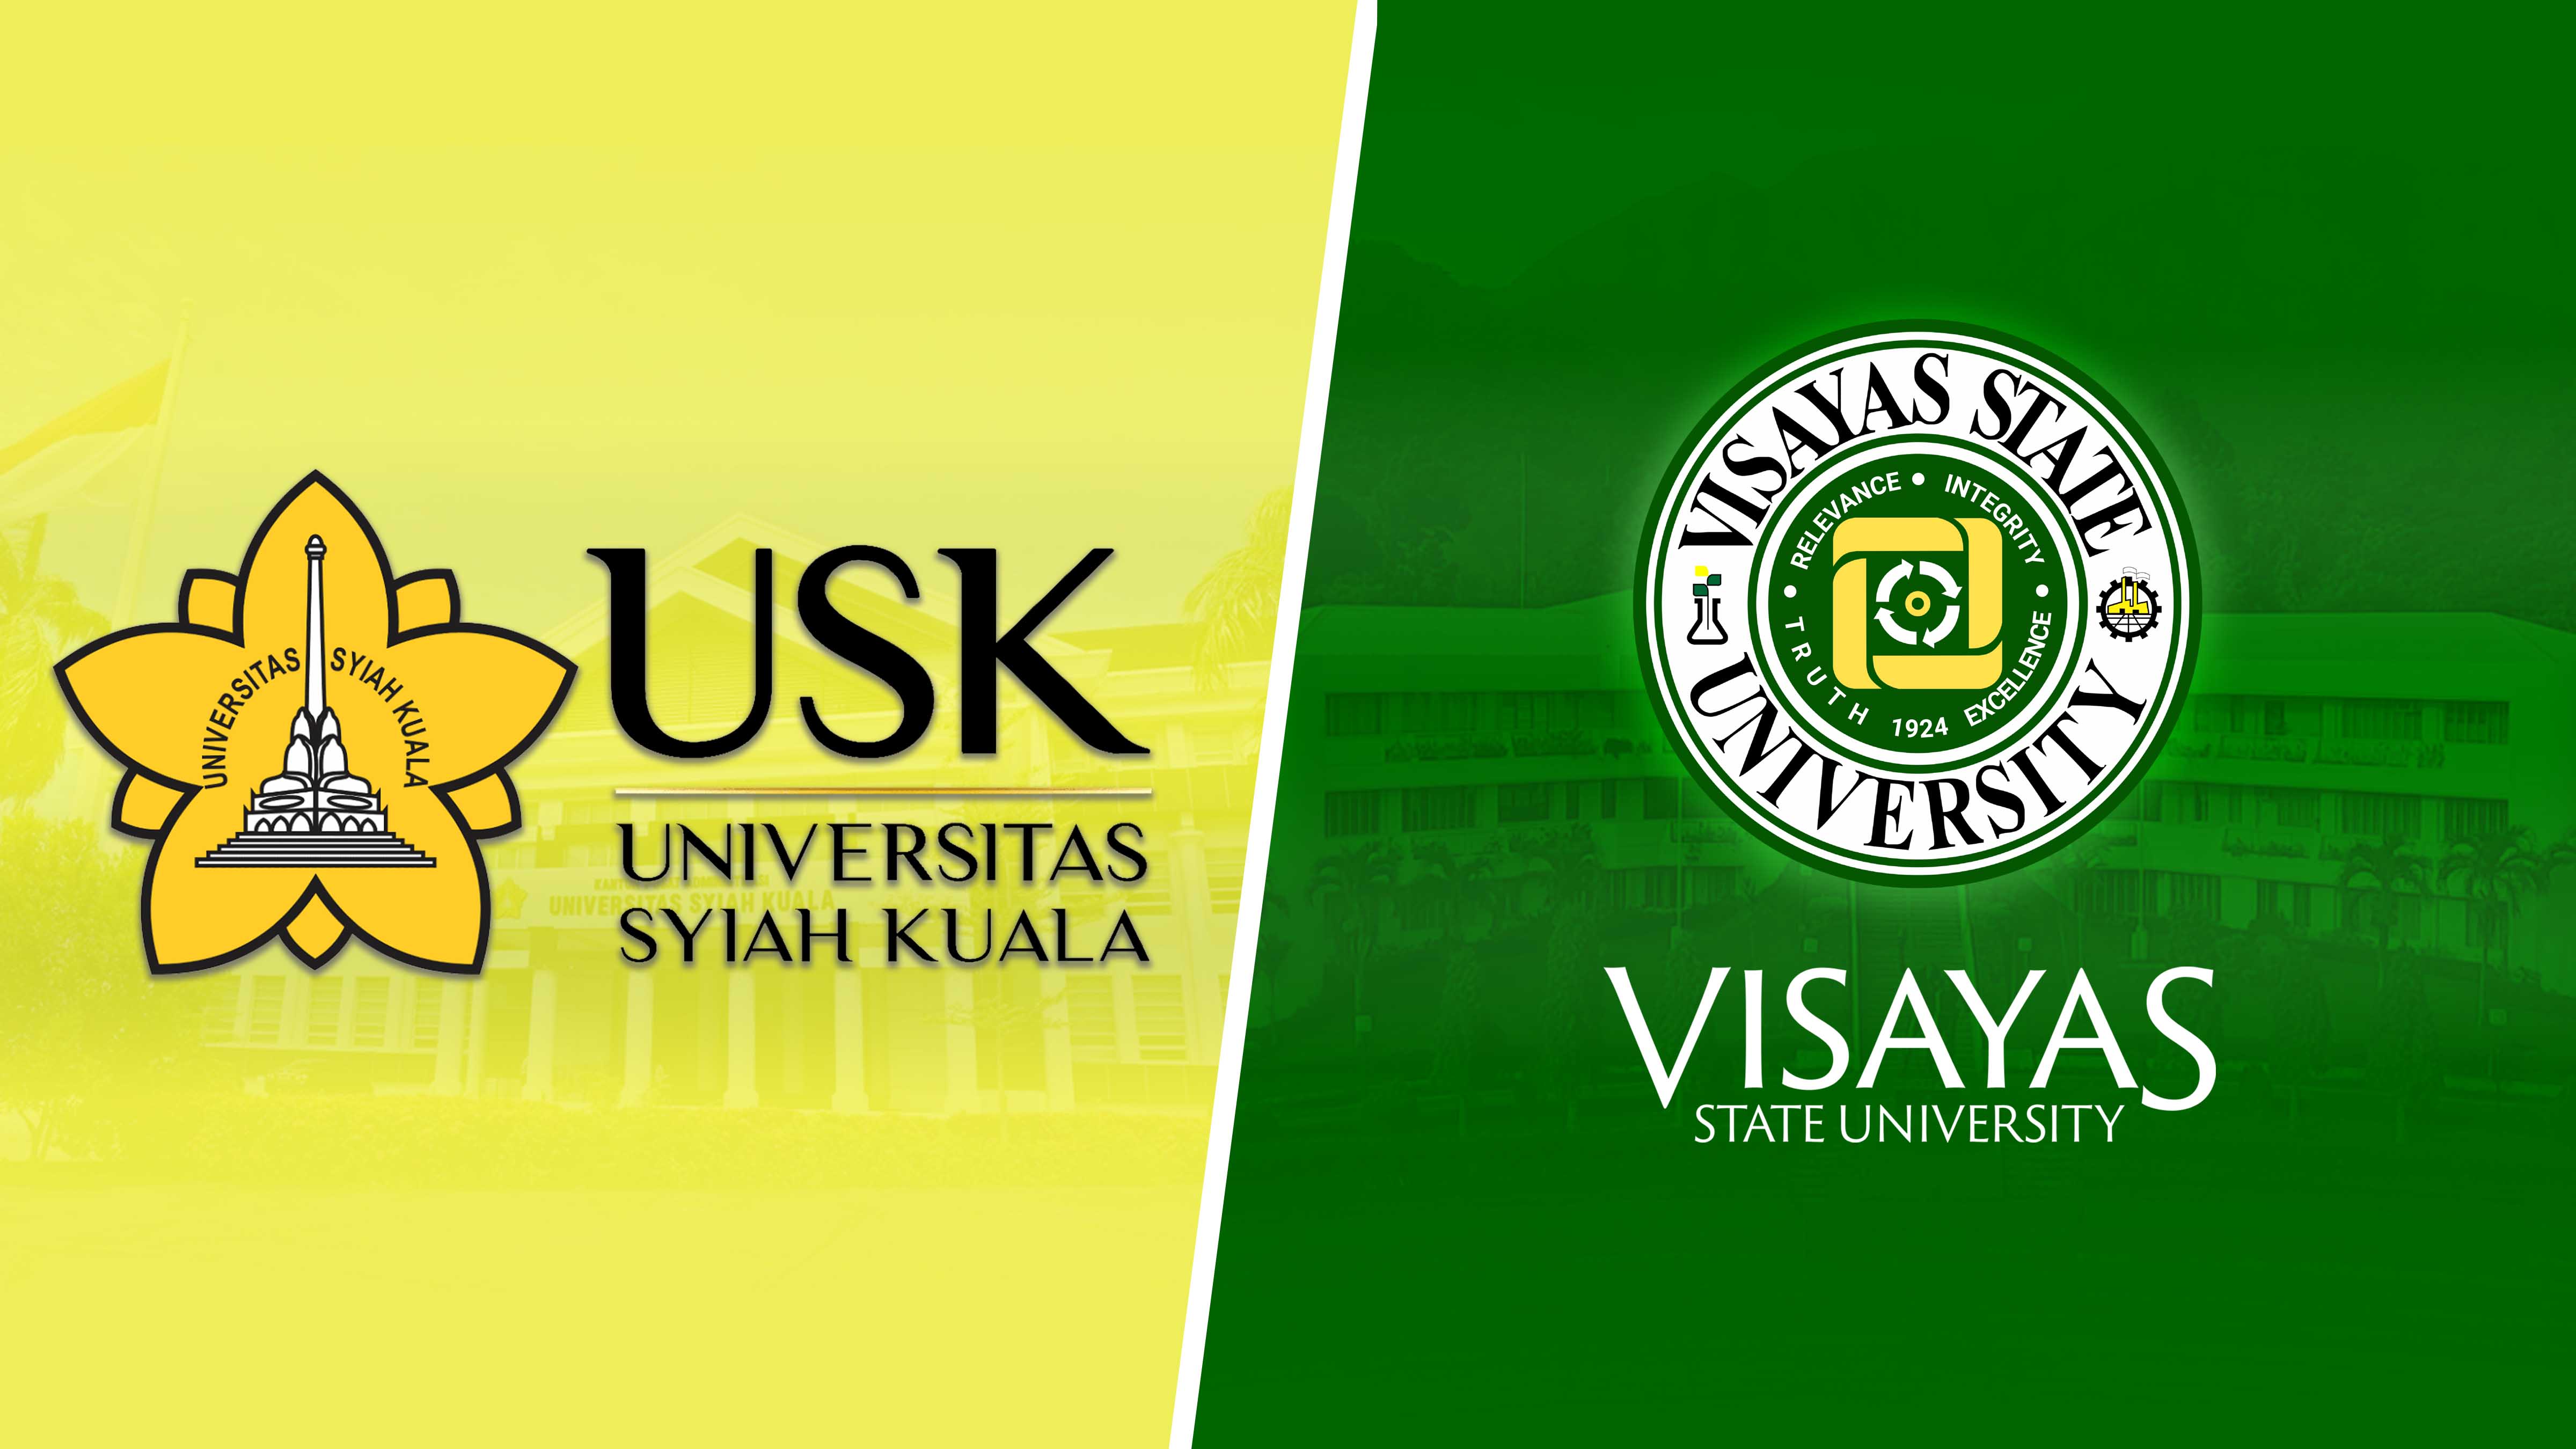 VSU-USK partnership